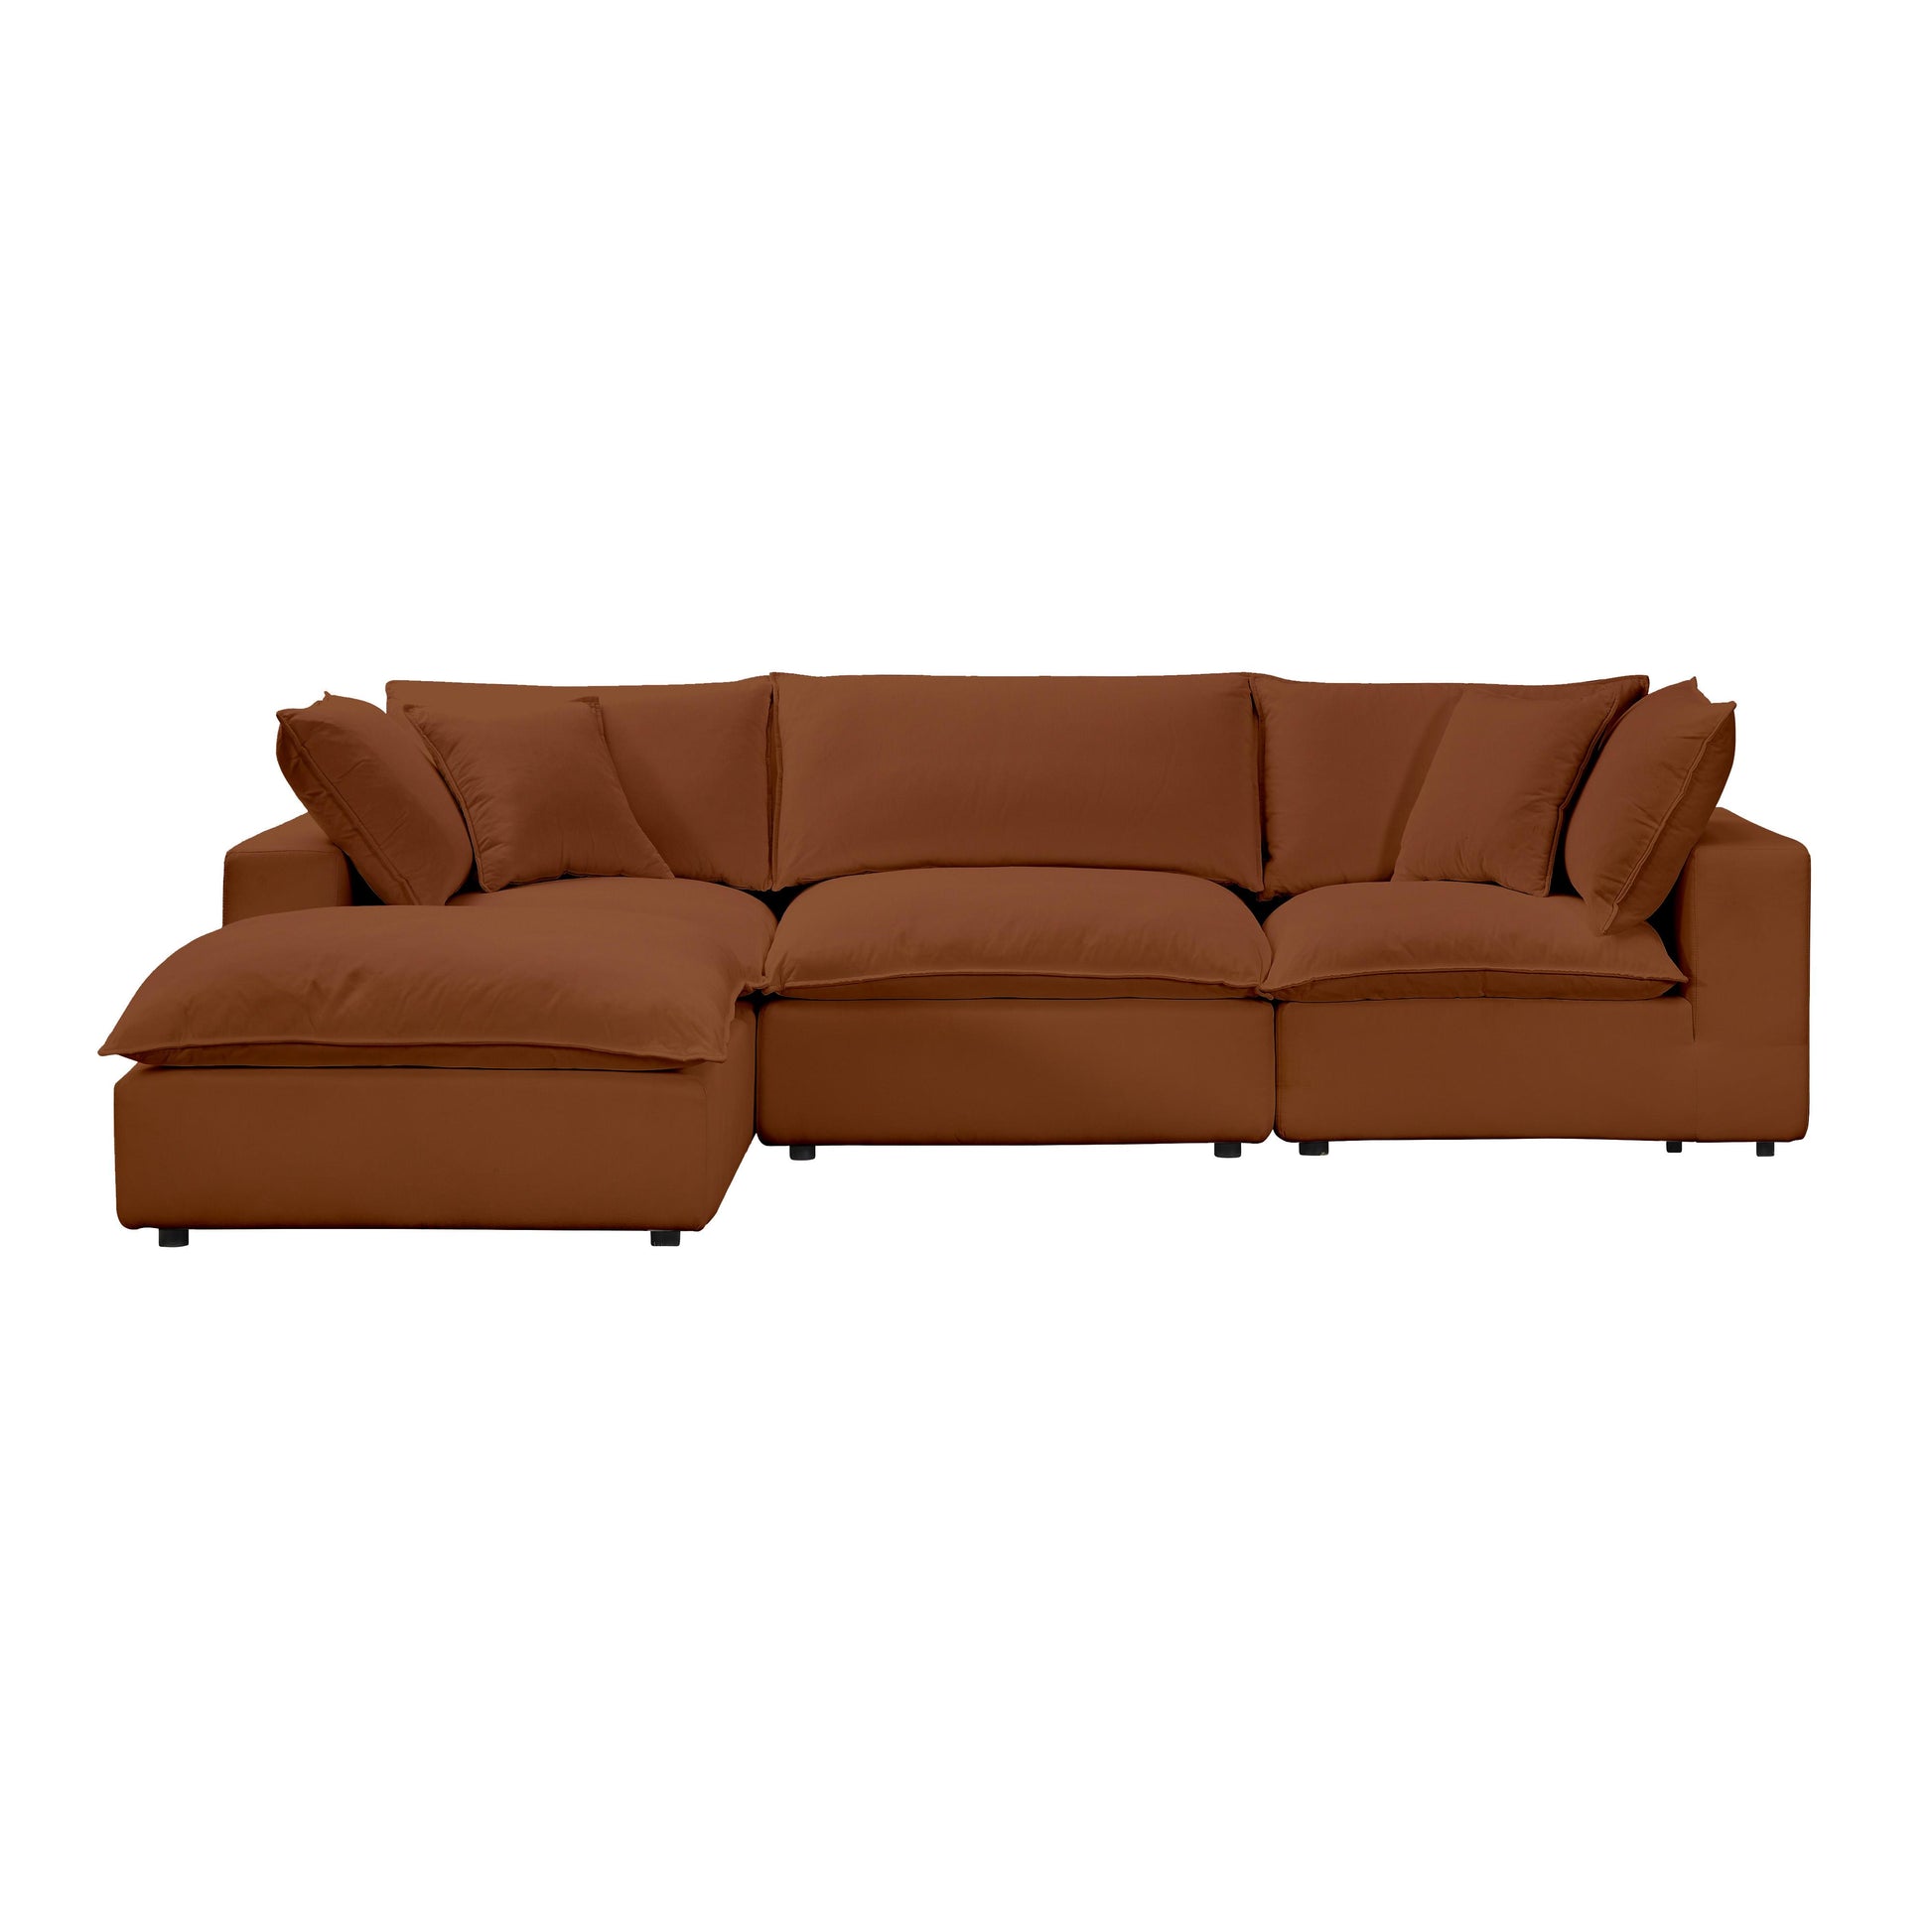 Tov Furniture Cali Rust Modular 4 Piece Sectional